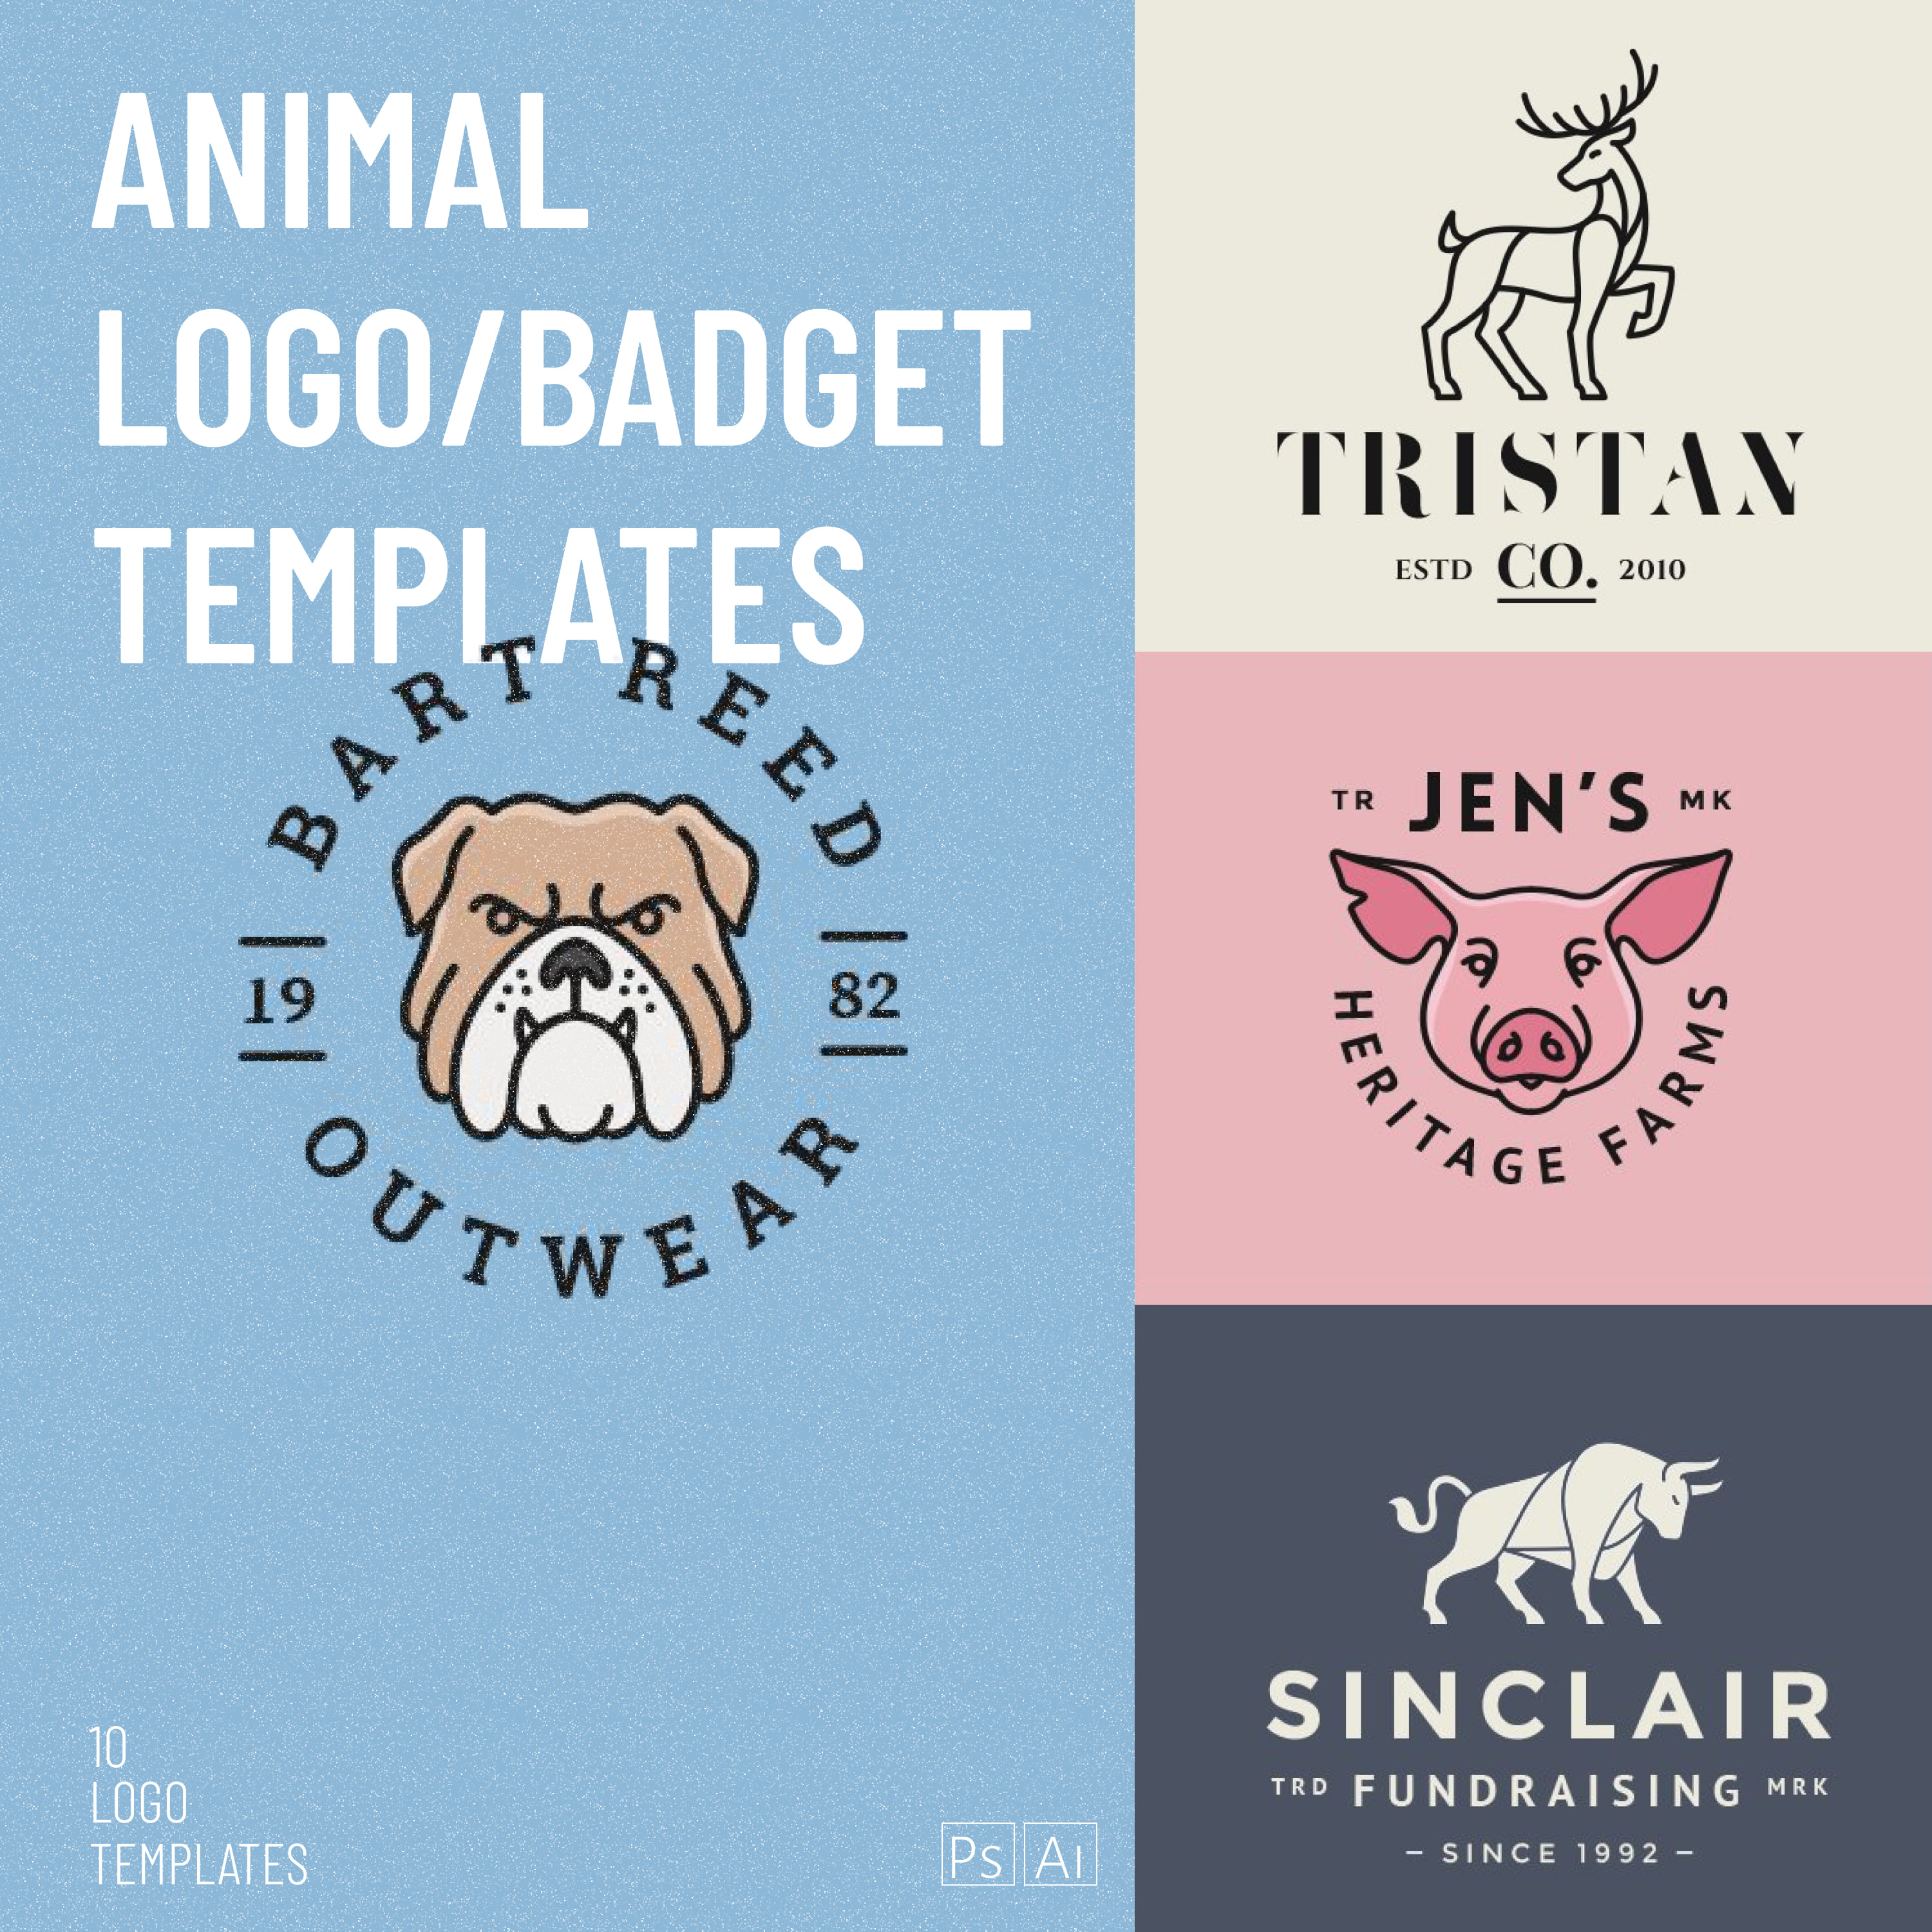 Animal Logo/Badge Templates Vol.1 cover.